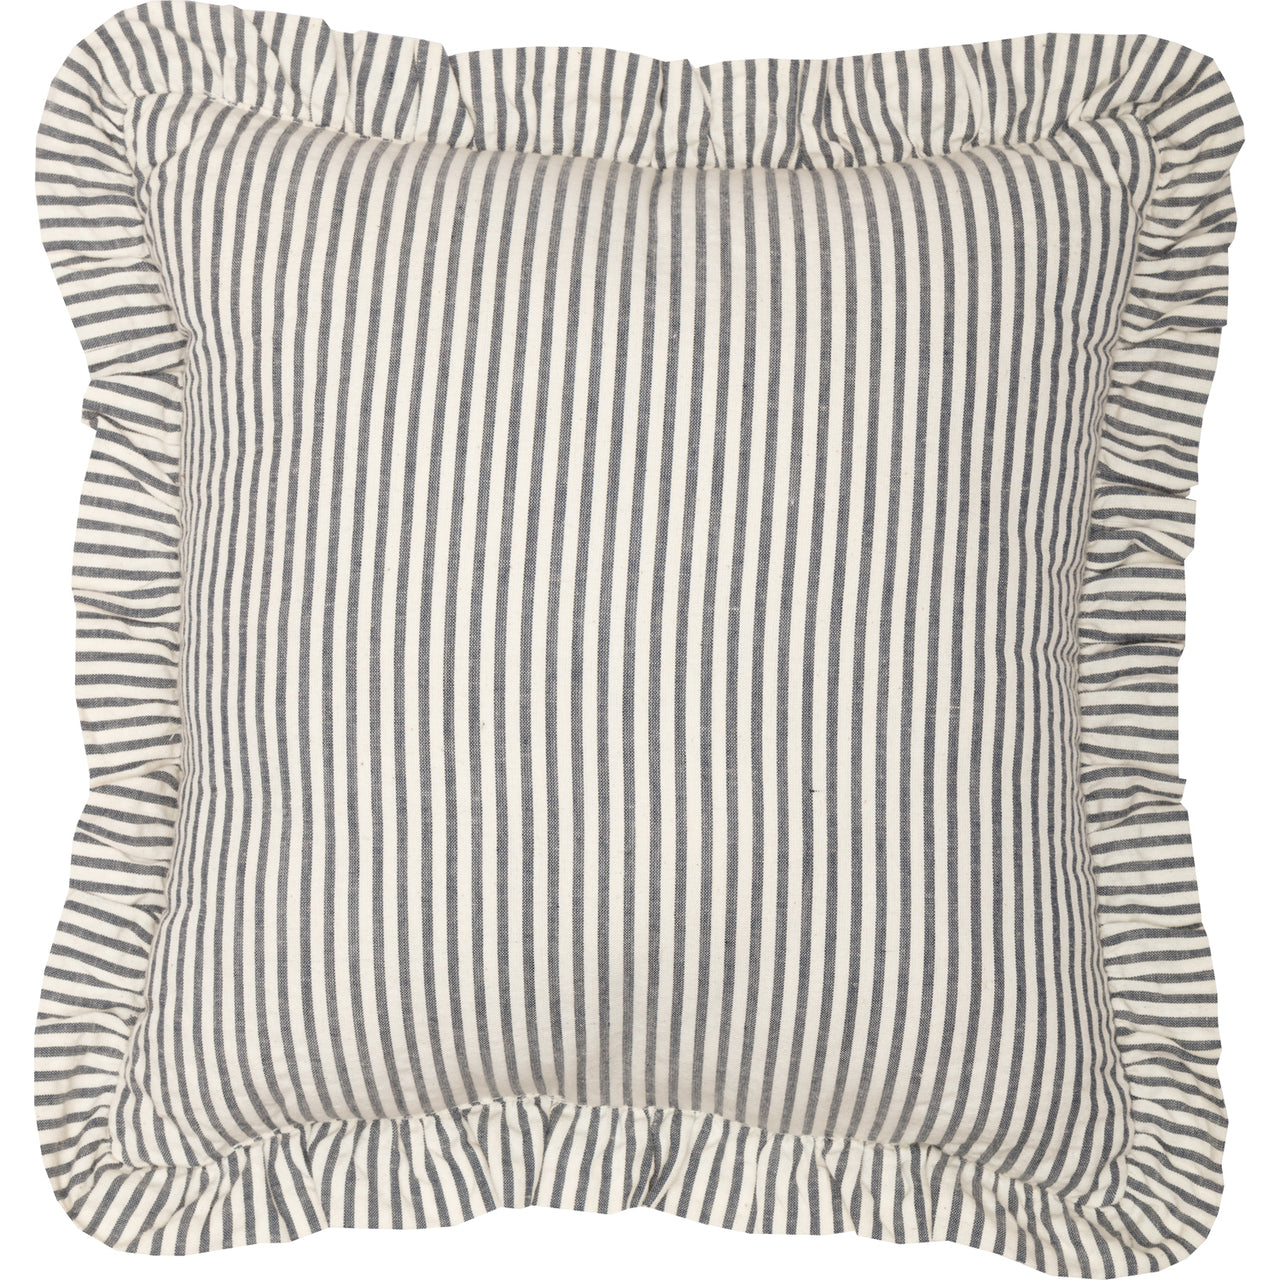 Hatteras Seersucker Blue Ticking Stripe Fabric Pillow 12 VHC Brands